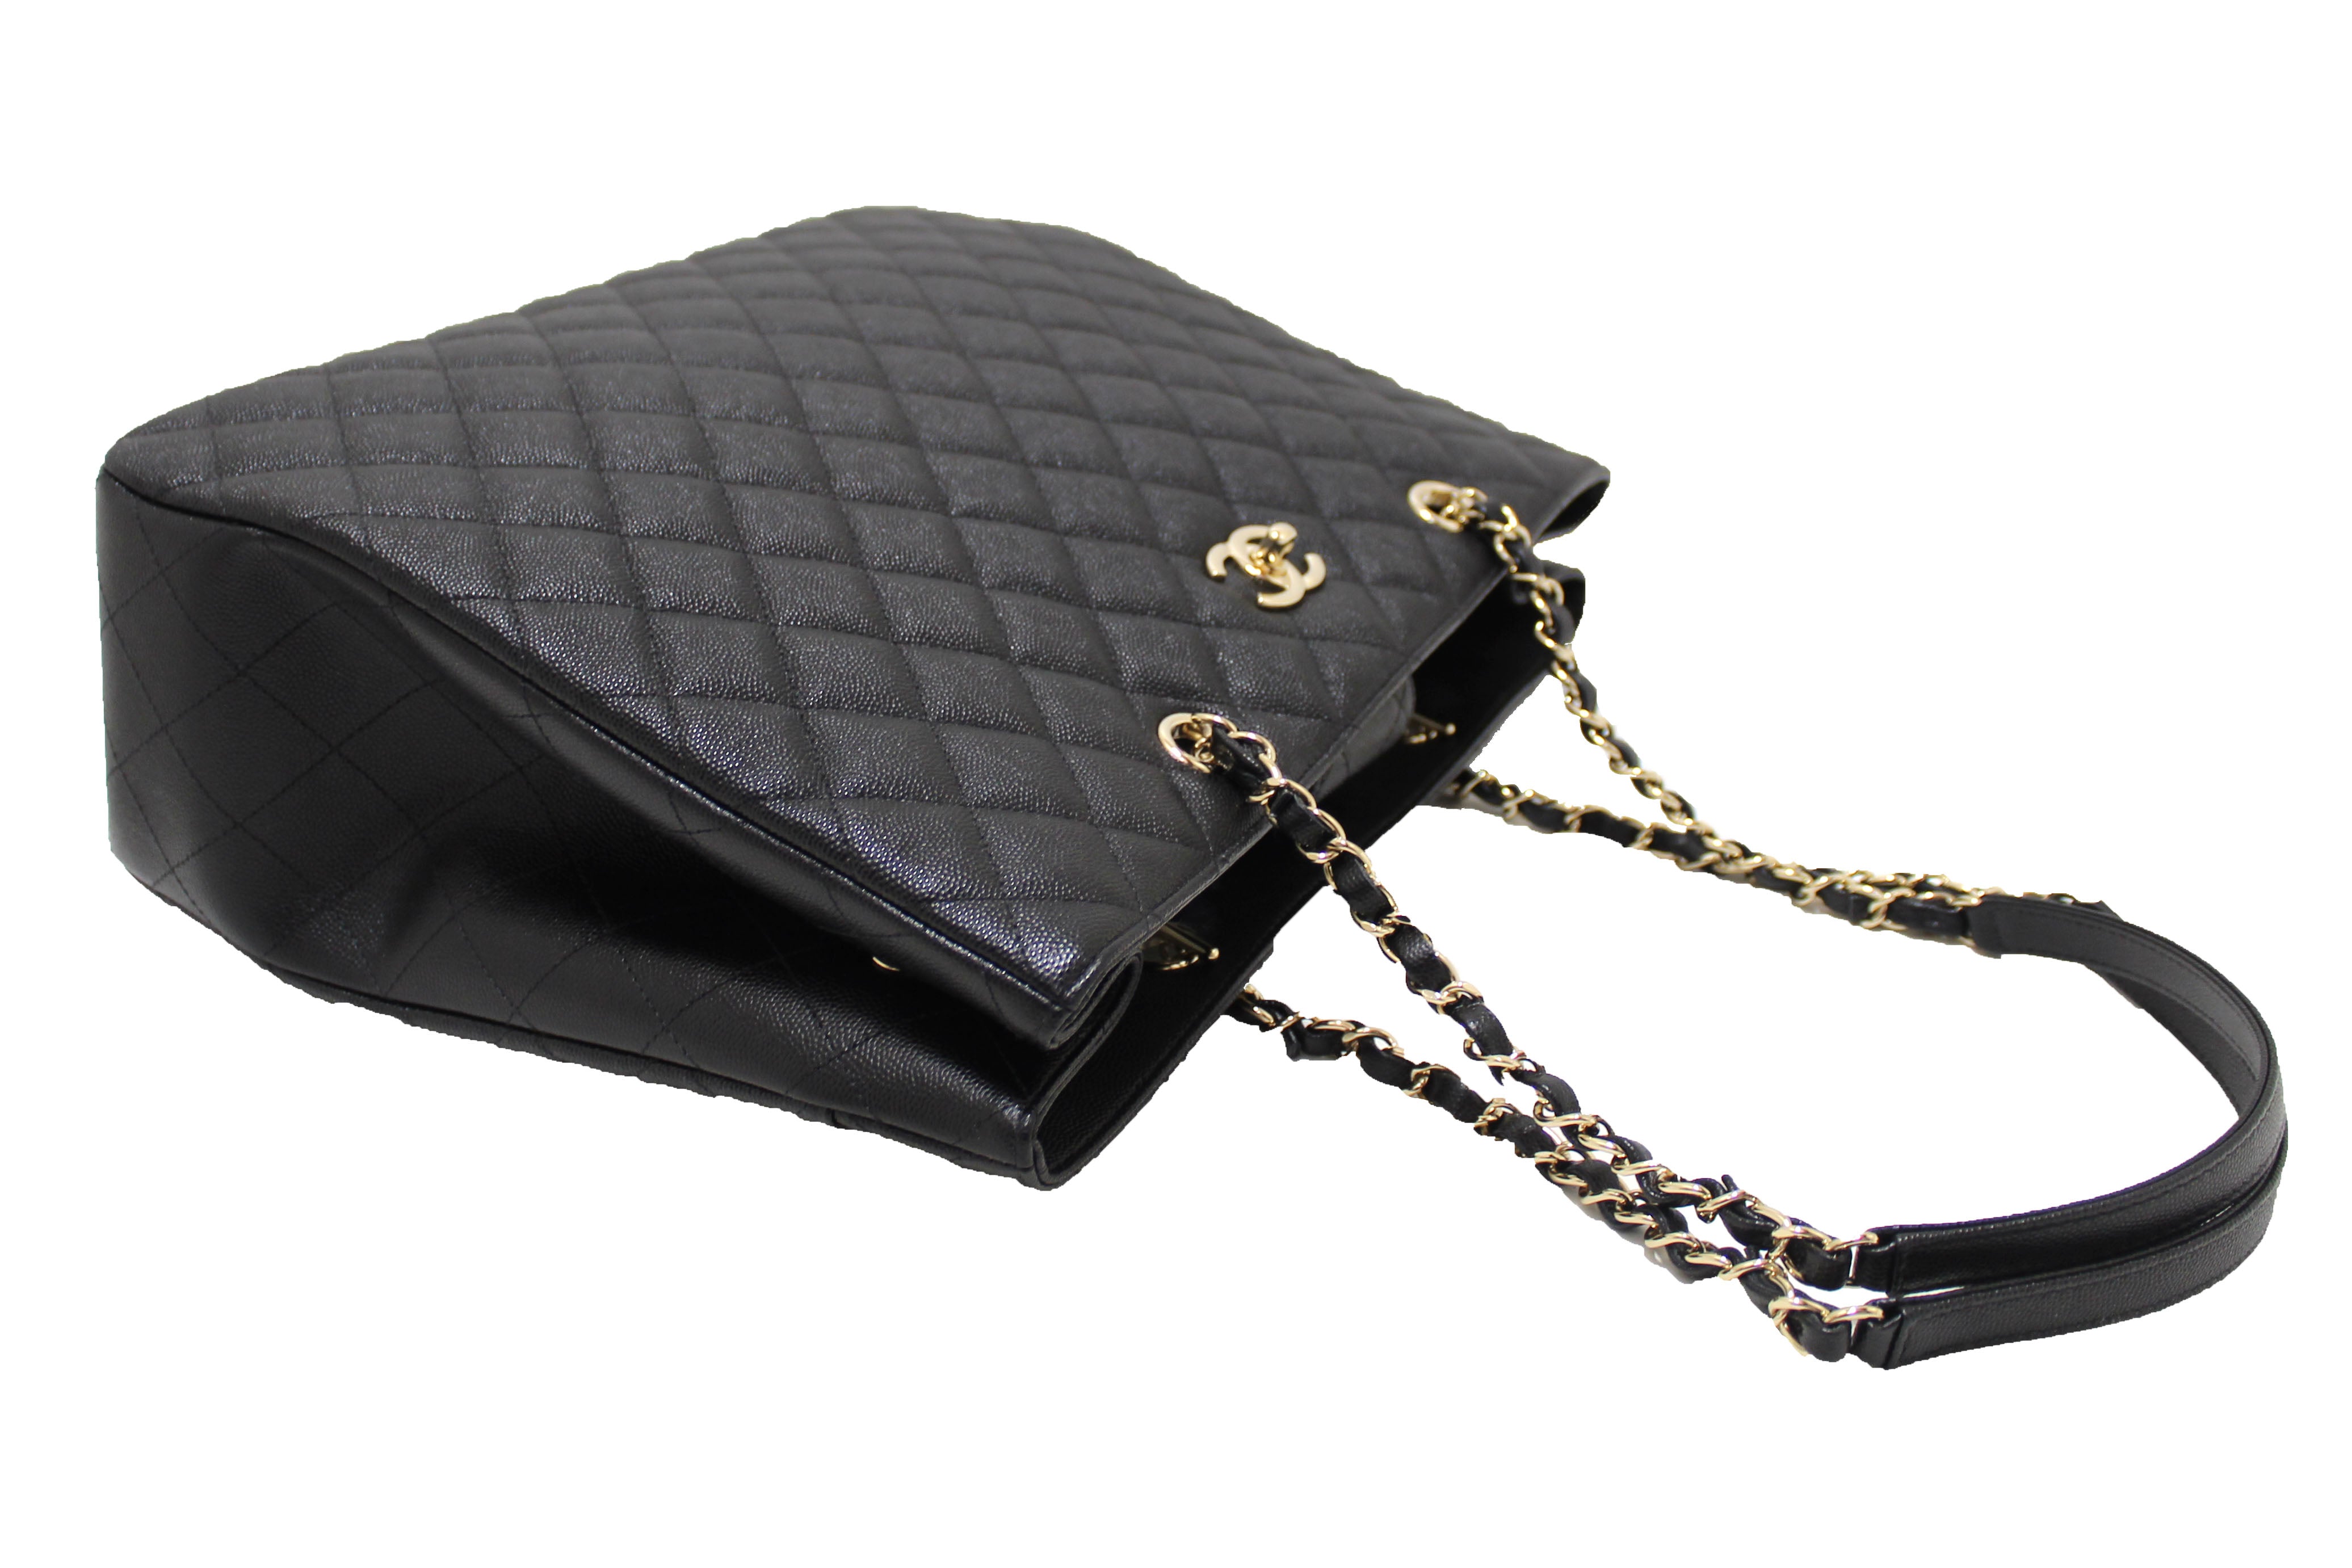 Chanel 2020 Large Classic Shopping Tote - Grey Totes, Handbags